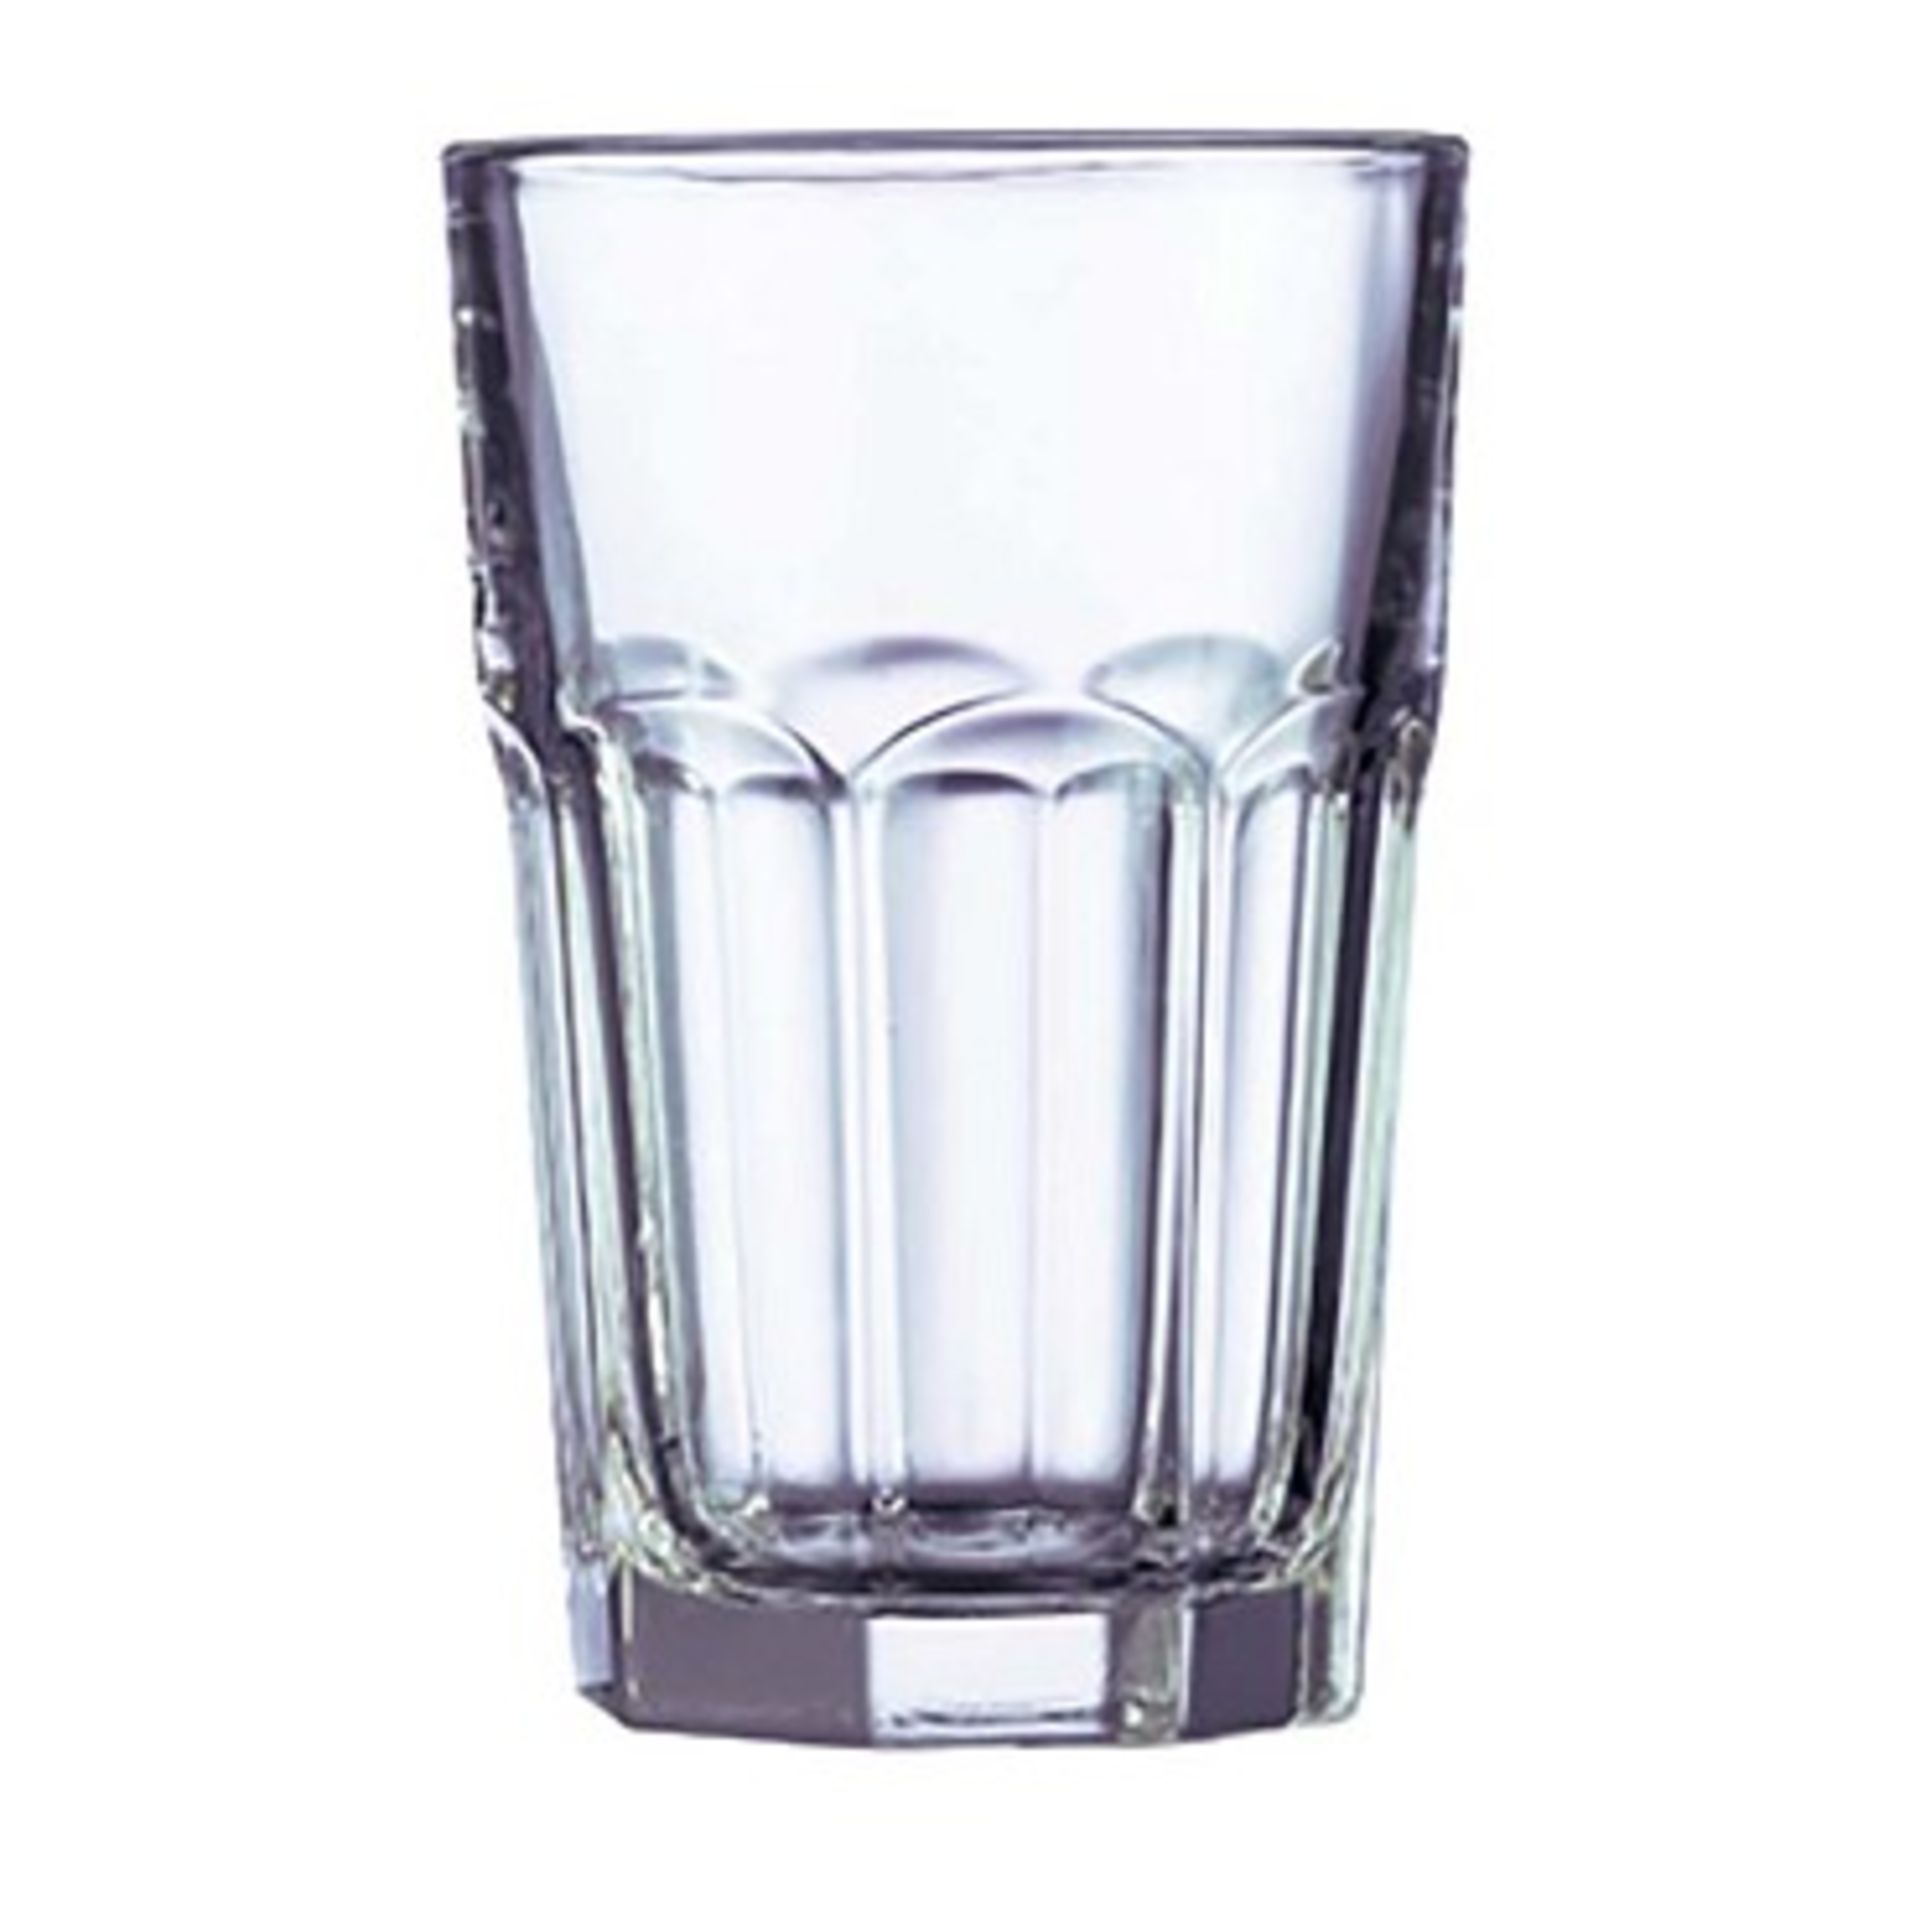 New Cardinal J4101 Beverage Glass, Tall, Gibraltar style, 10 oz, 3 dz per case